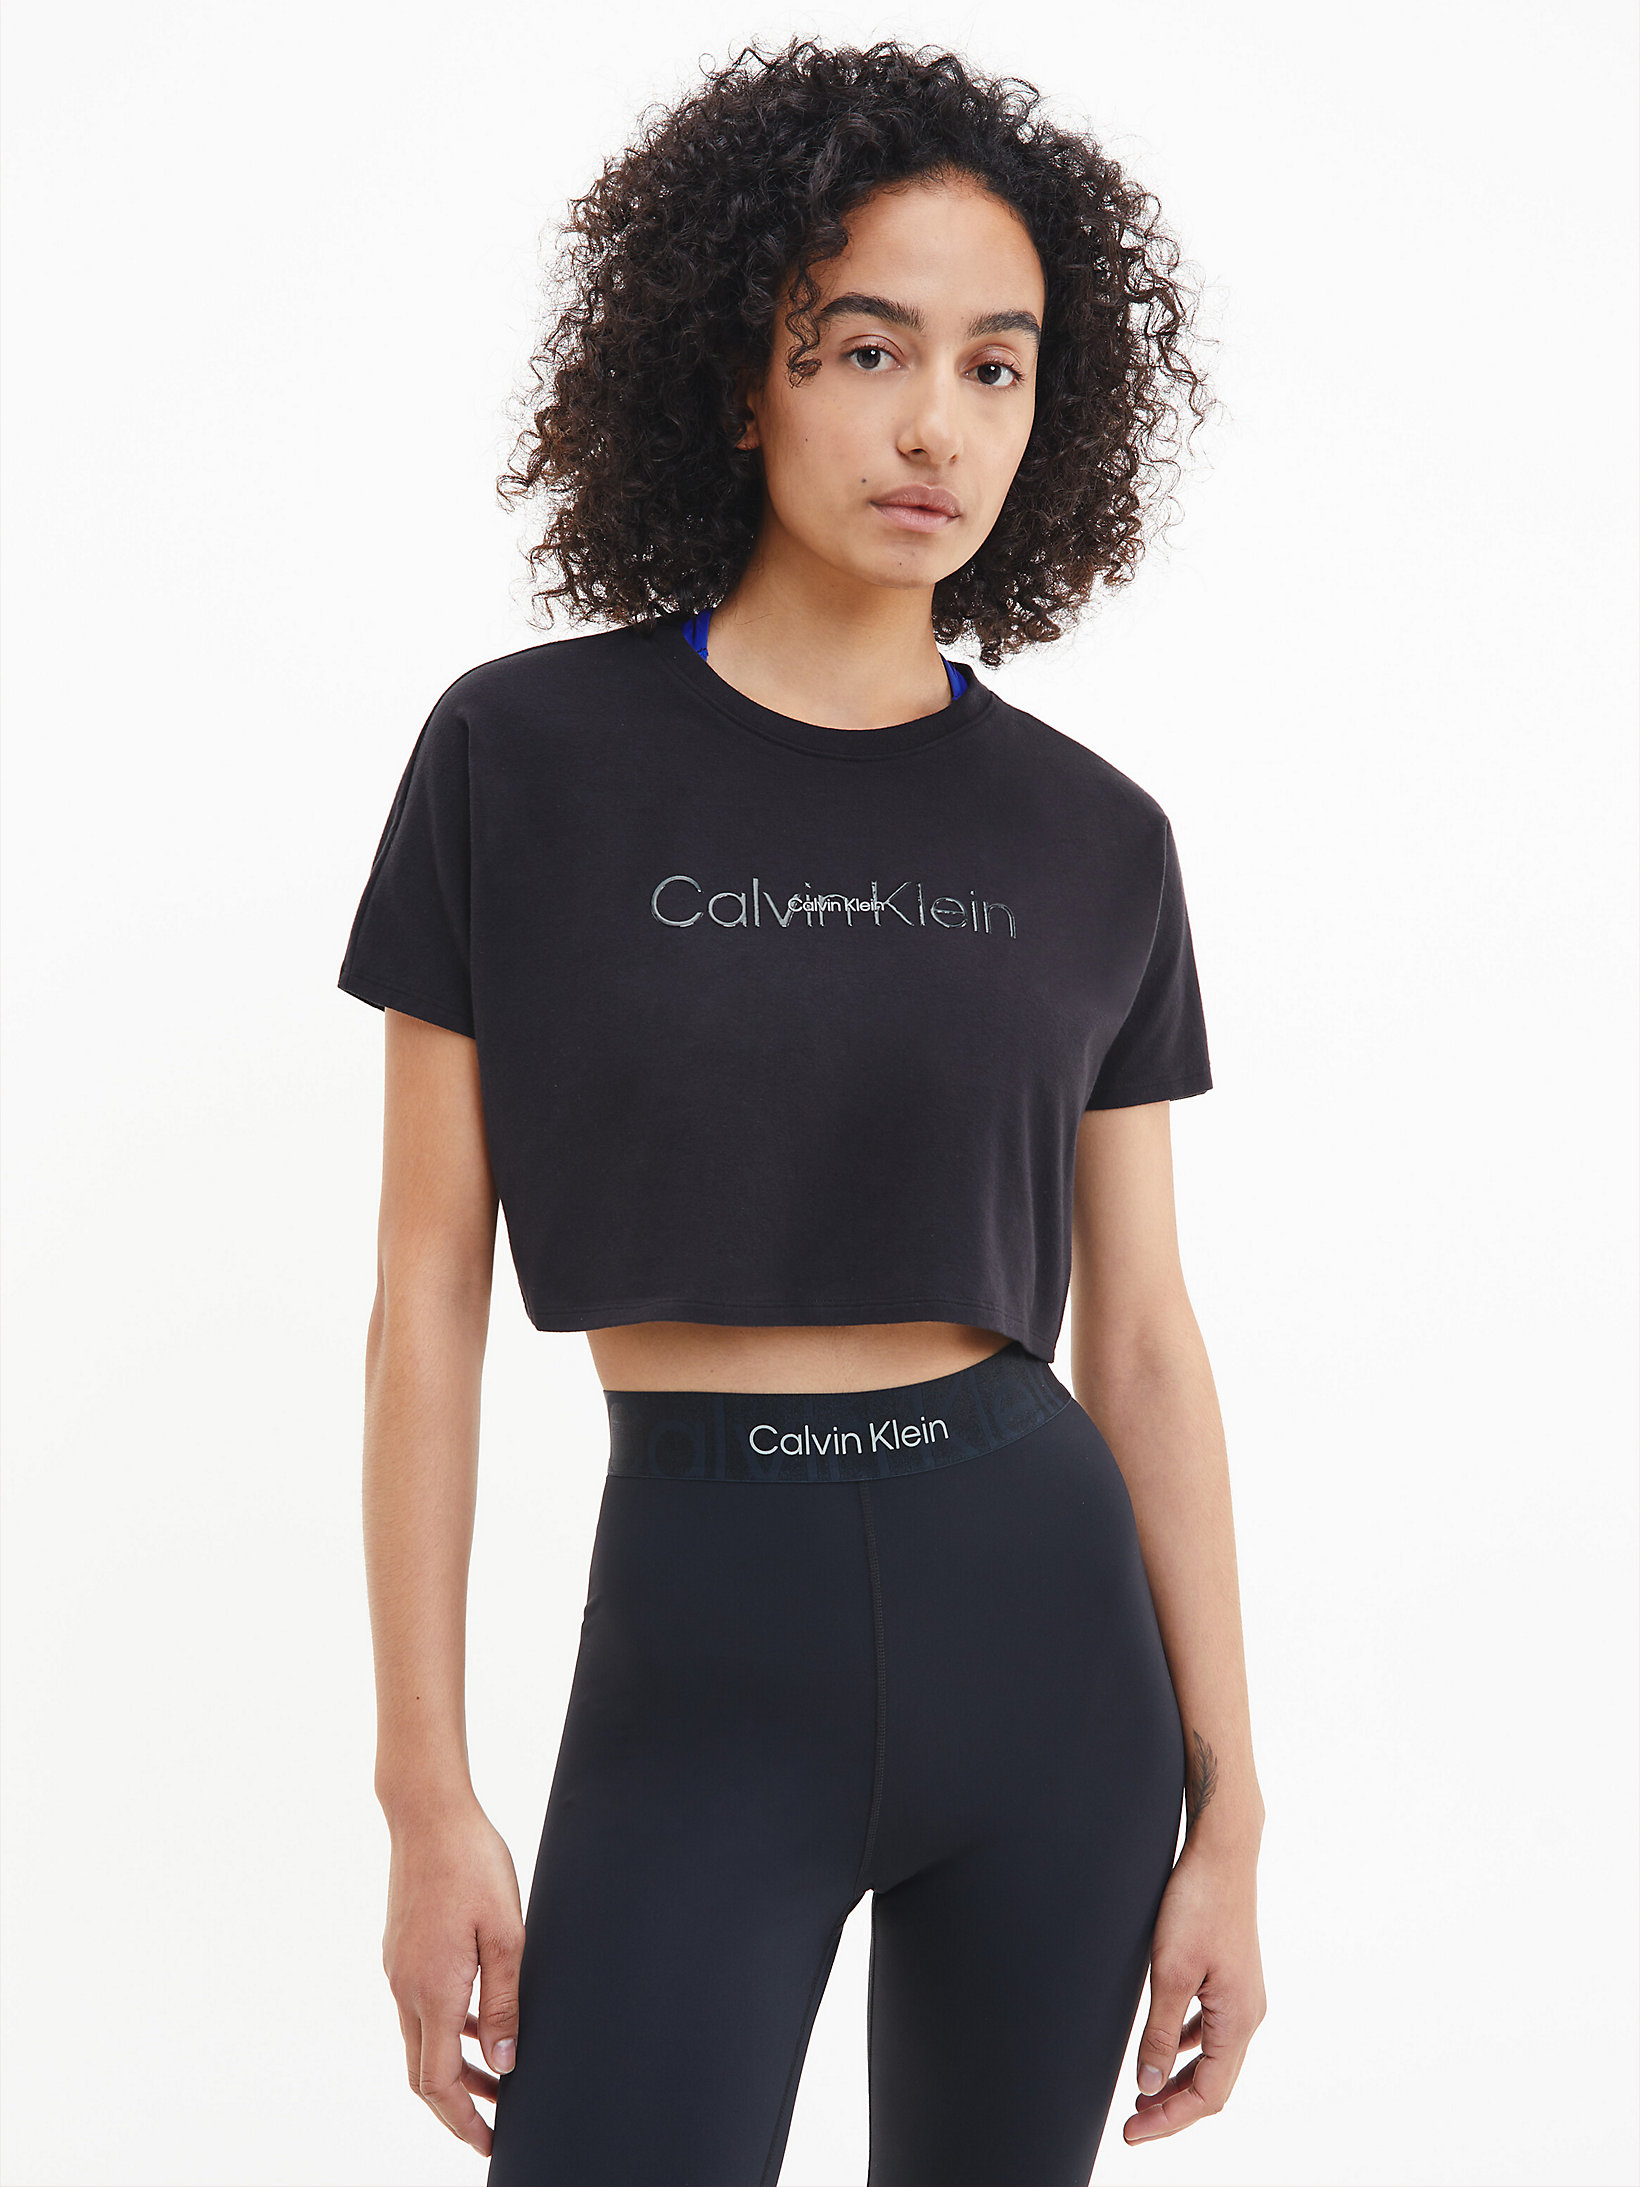 Black Beauty > T-Shirt Sportowy O Skróconym Kroju > undefined Kobiety - Calvin Klein